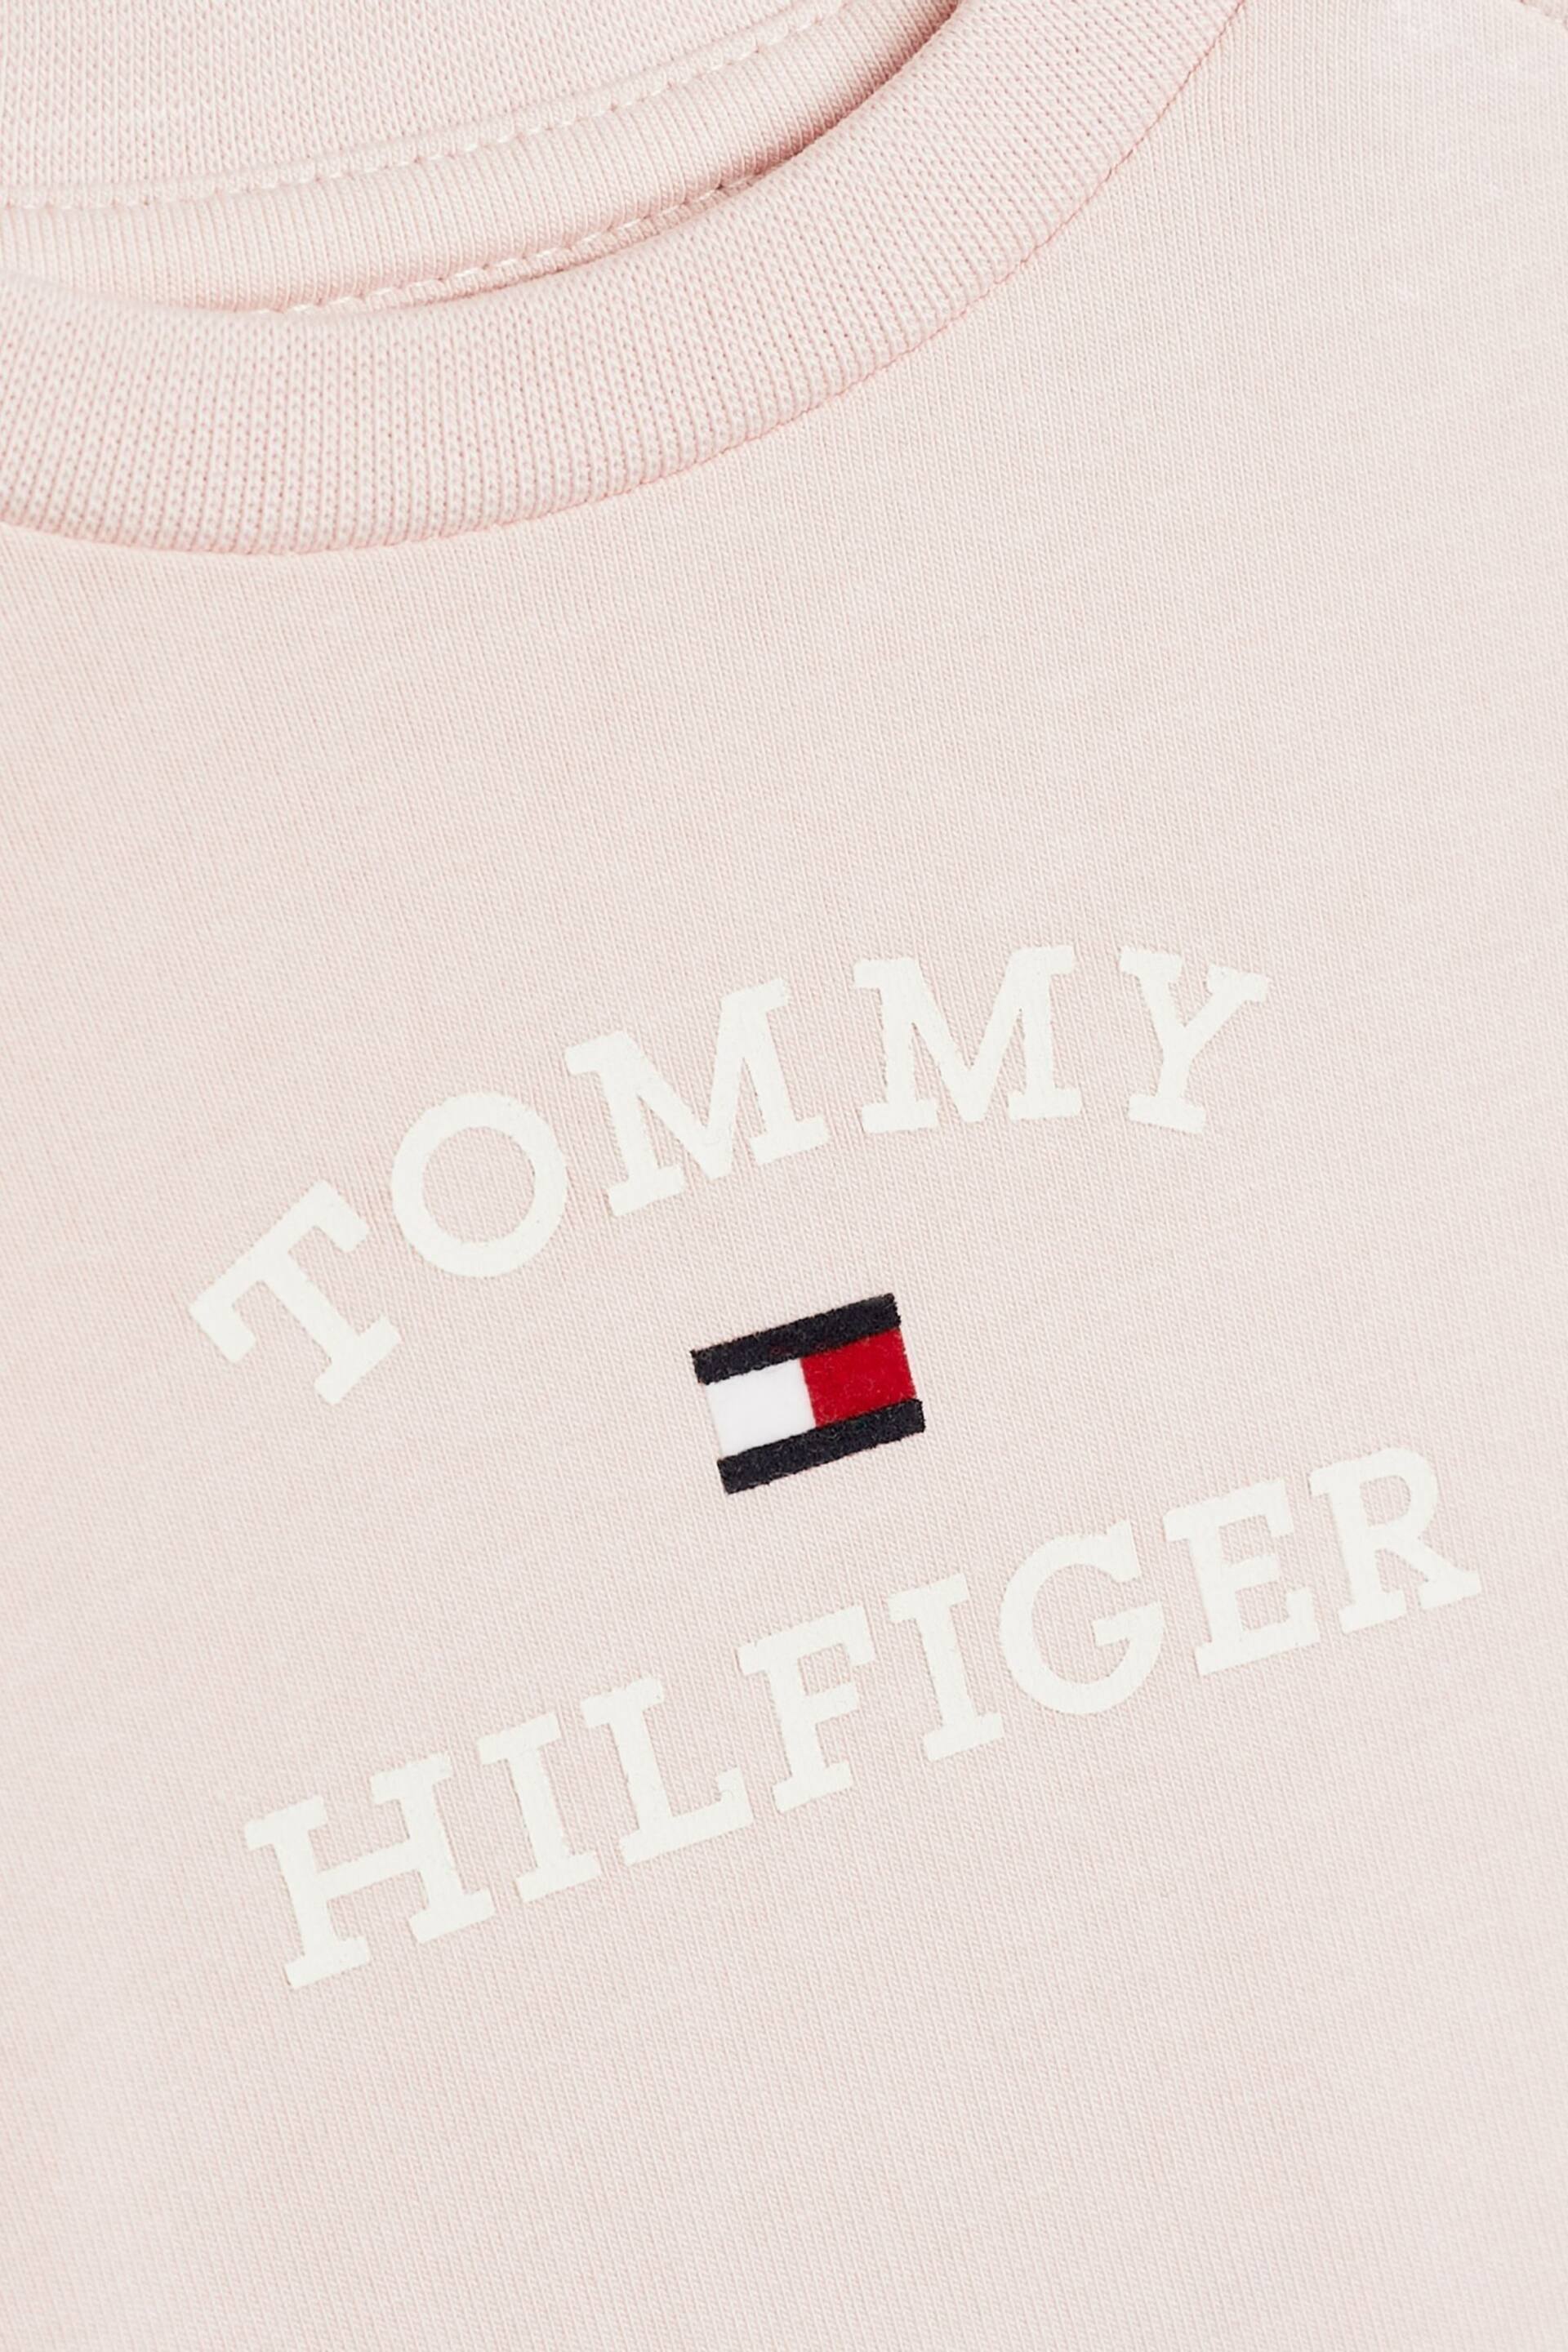 Tommy Hilfiger Baby Pink Logo Shorts Set - Image 3 of 3